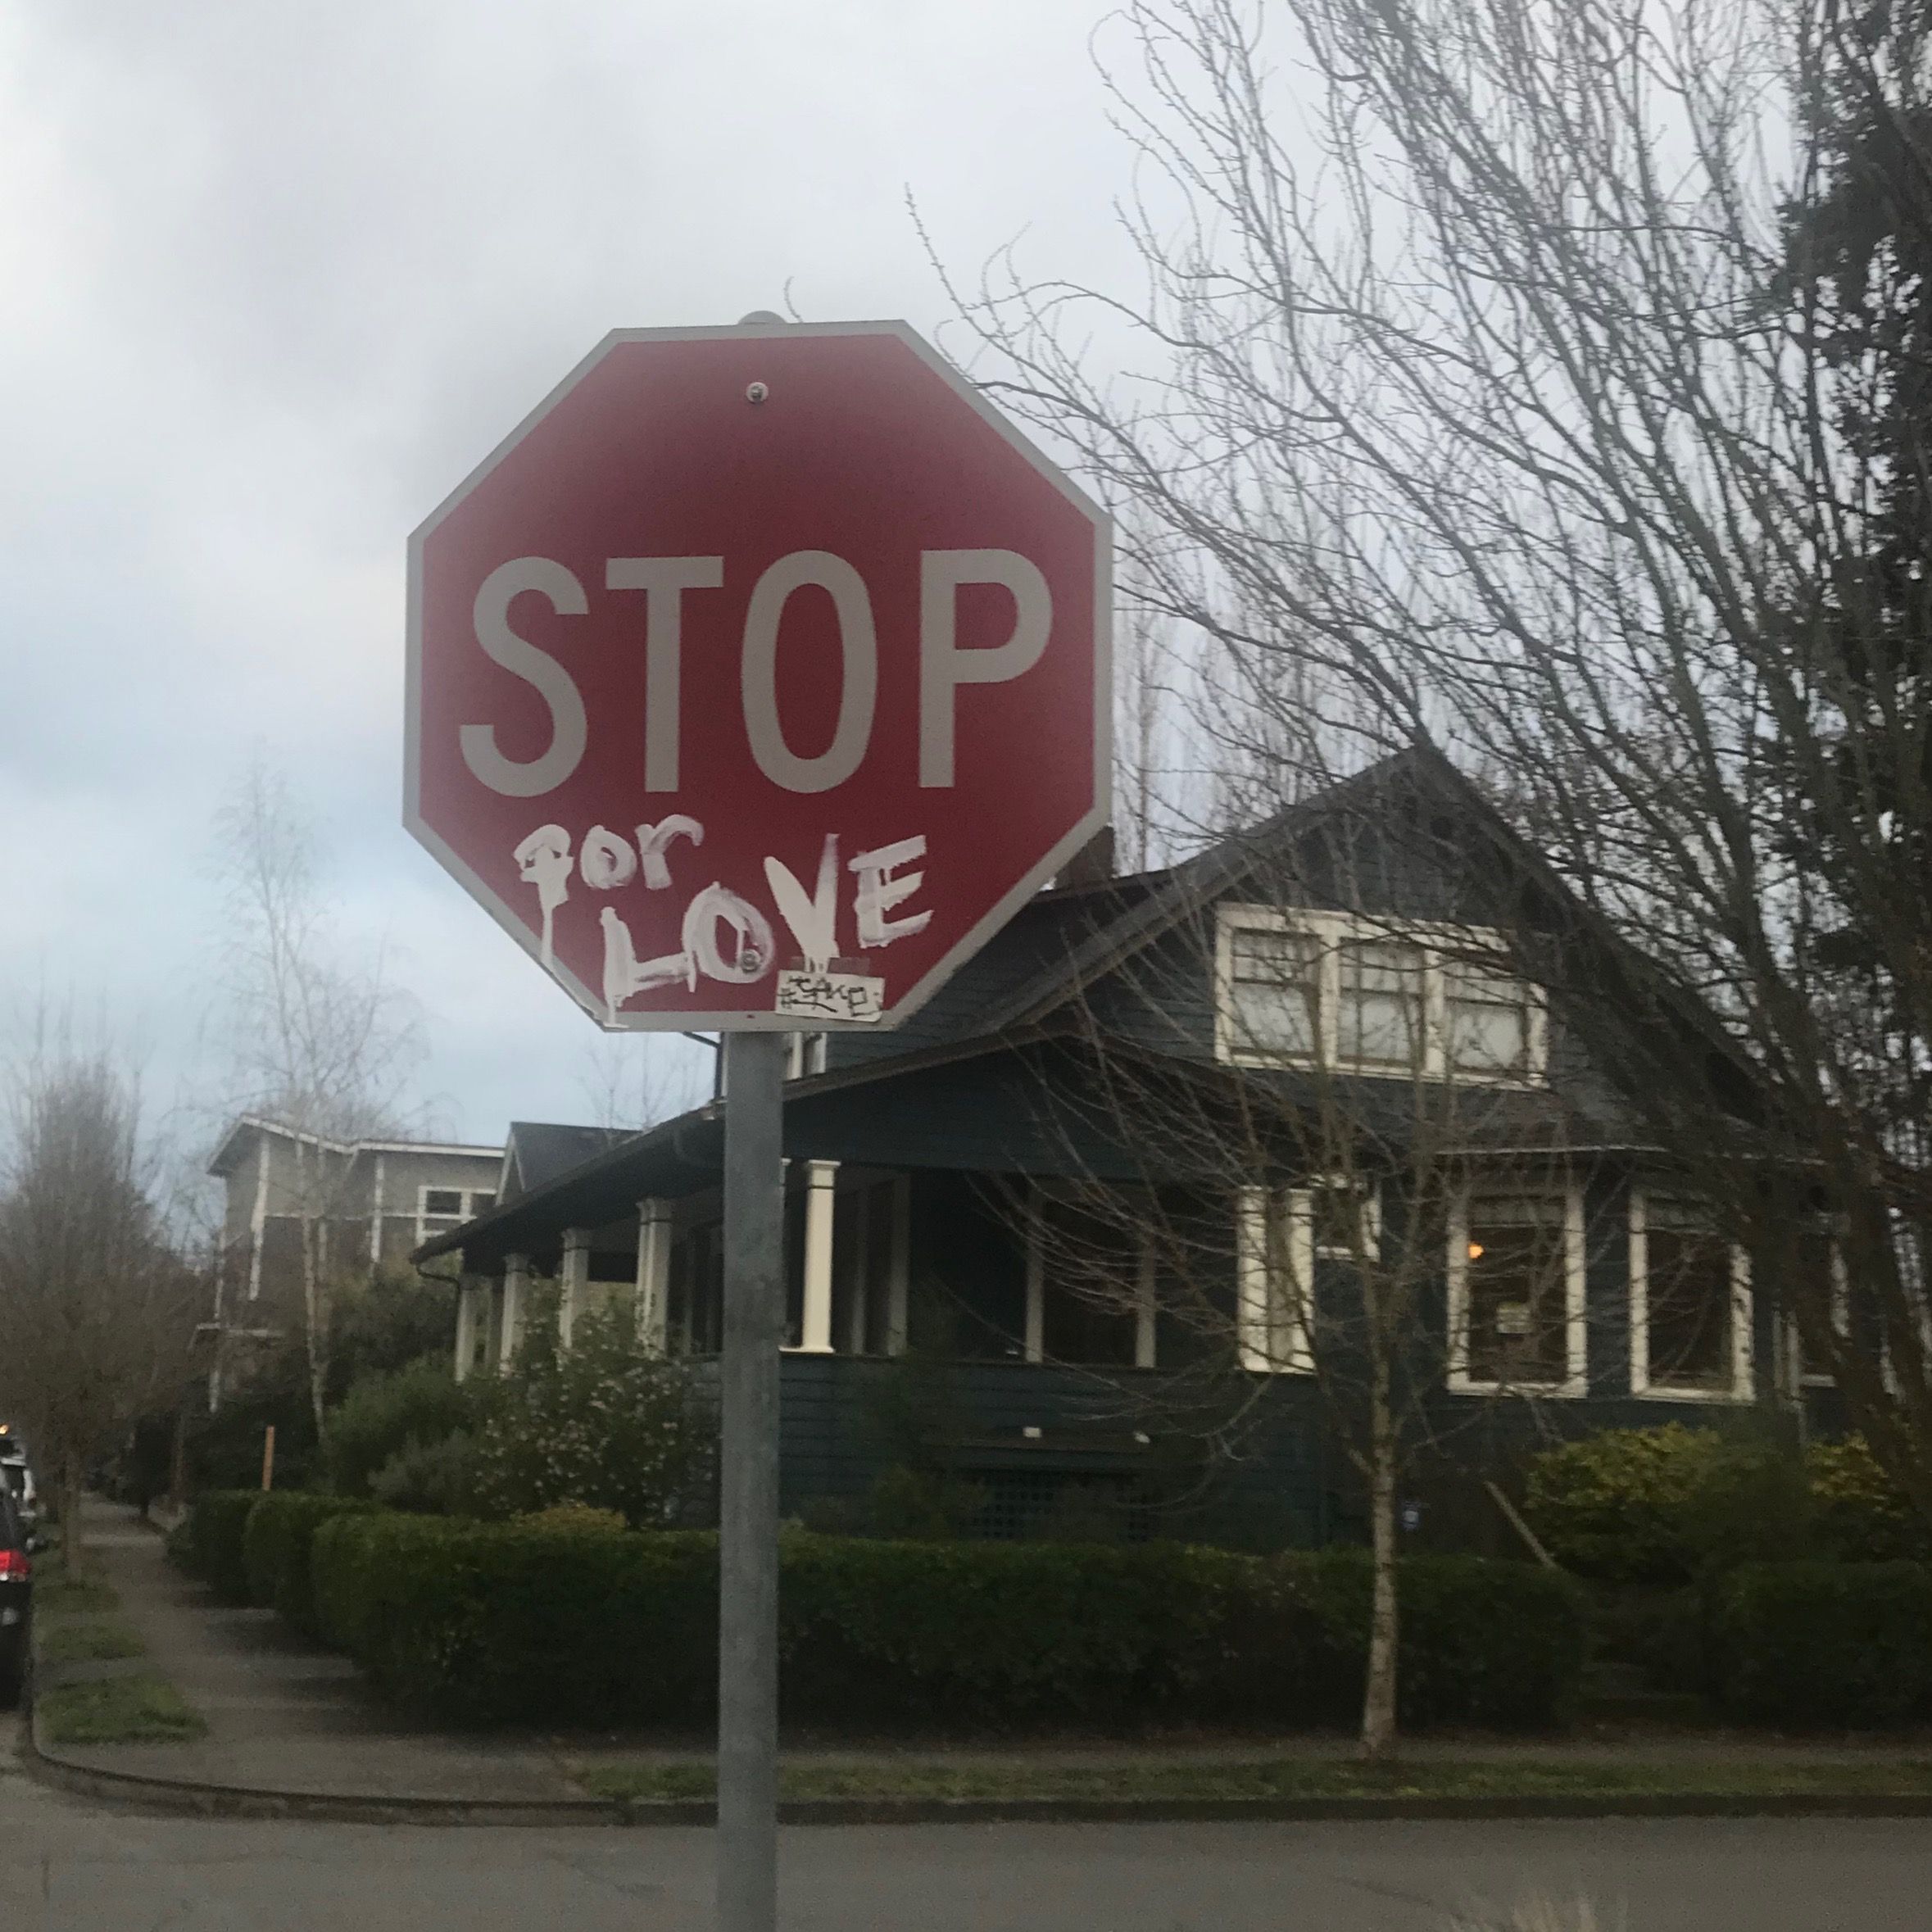 Stop for love, found on a run through NE Portland last week